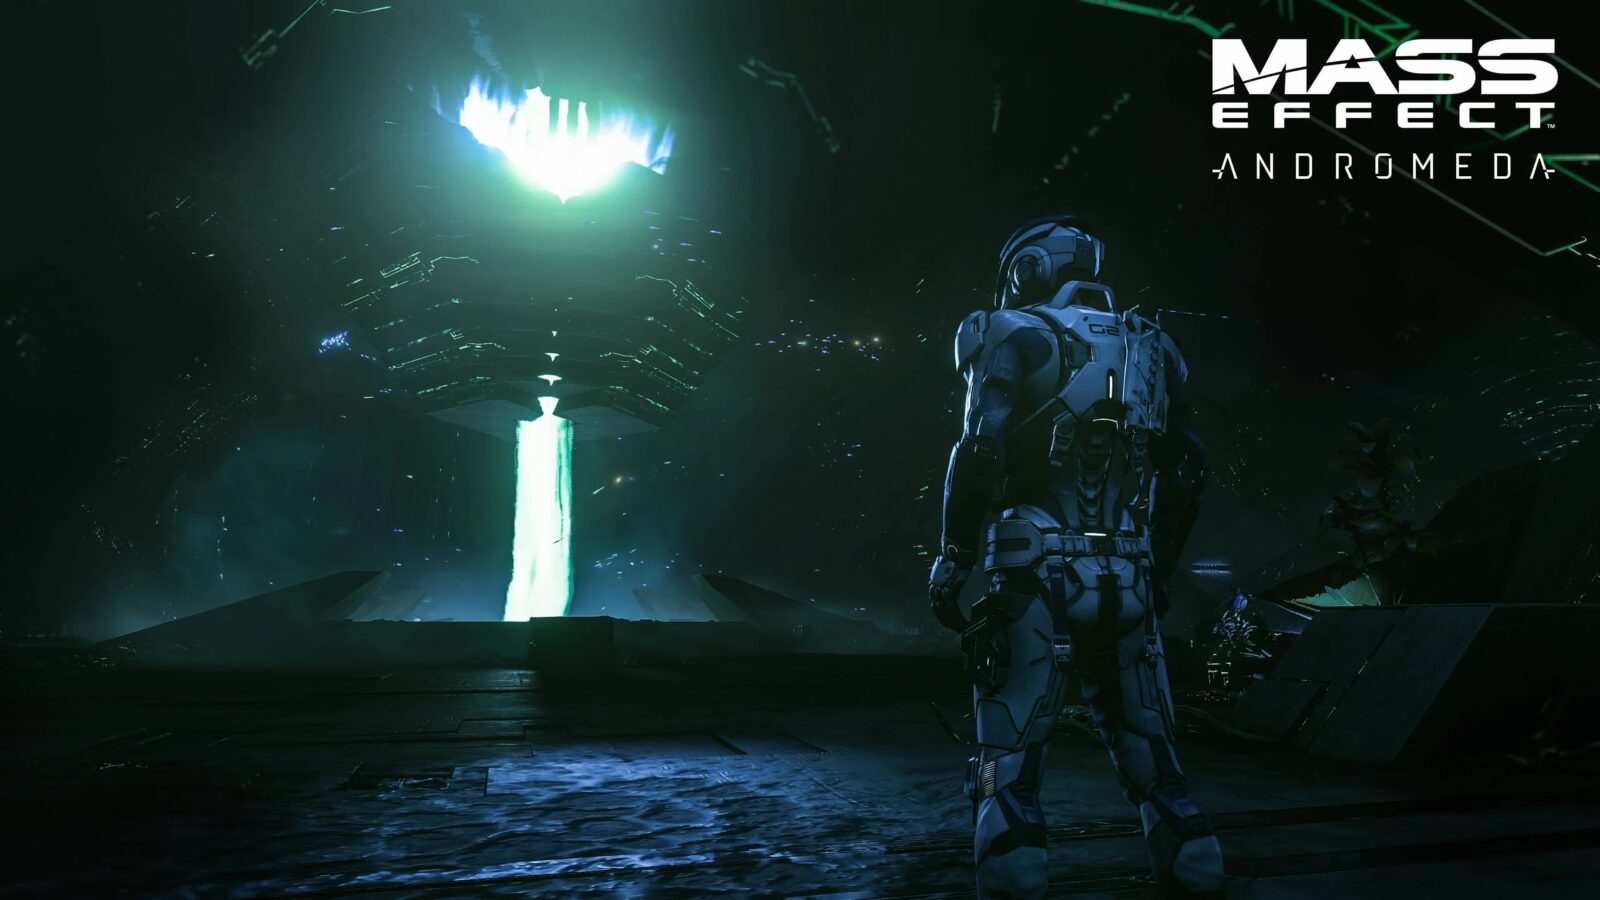 LiveWallpapers4Free.com | Mass Effect Andromeda PS4 Gameplay 4K - Animated Desktop Wallpaper